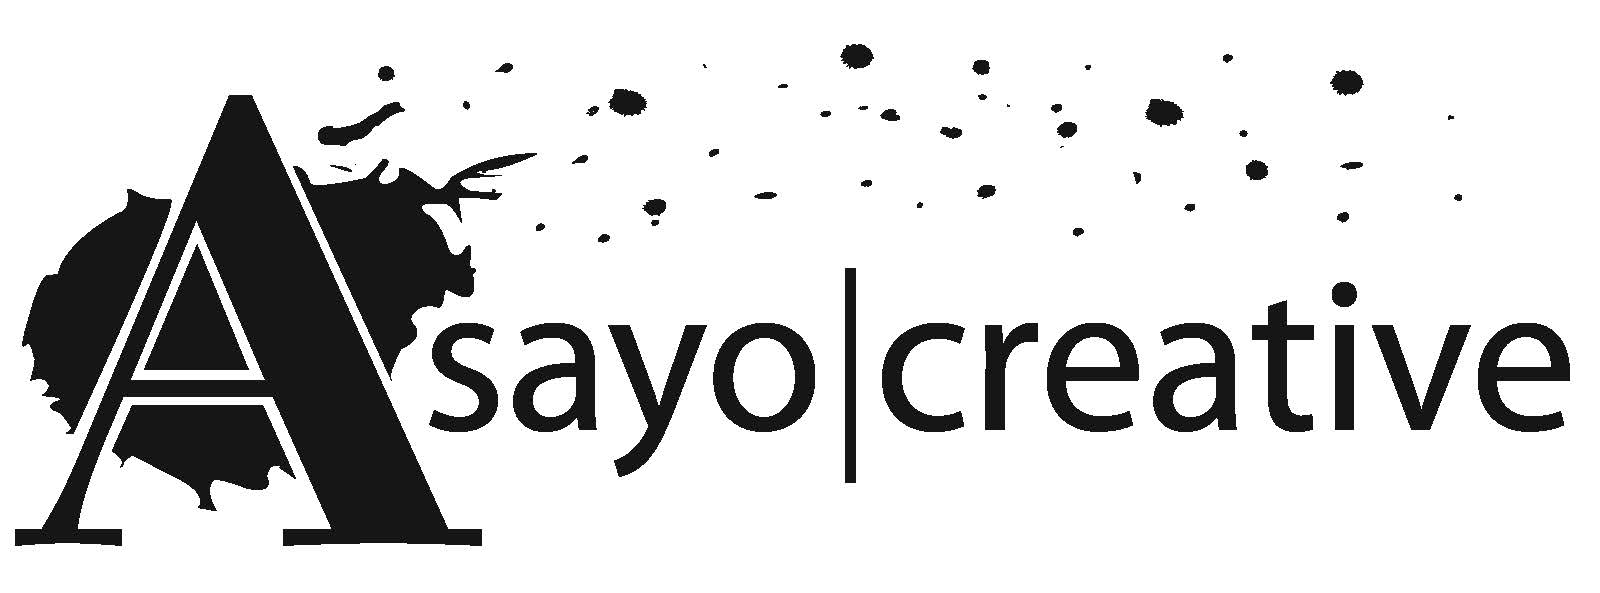 Asayo logo.jpg